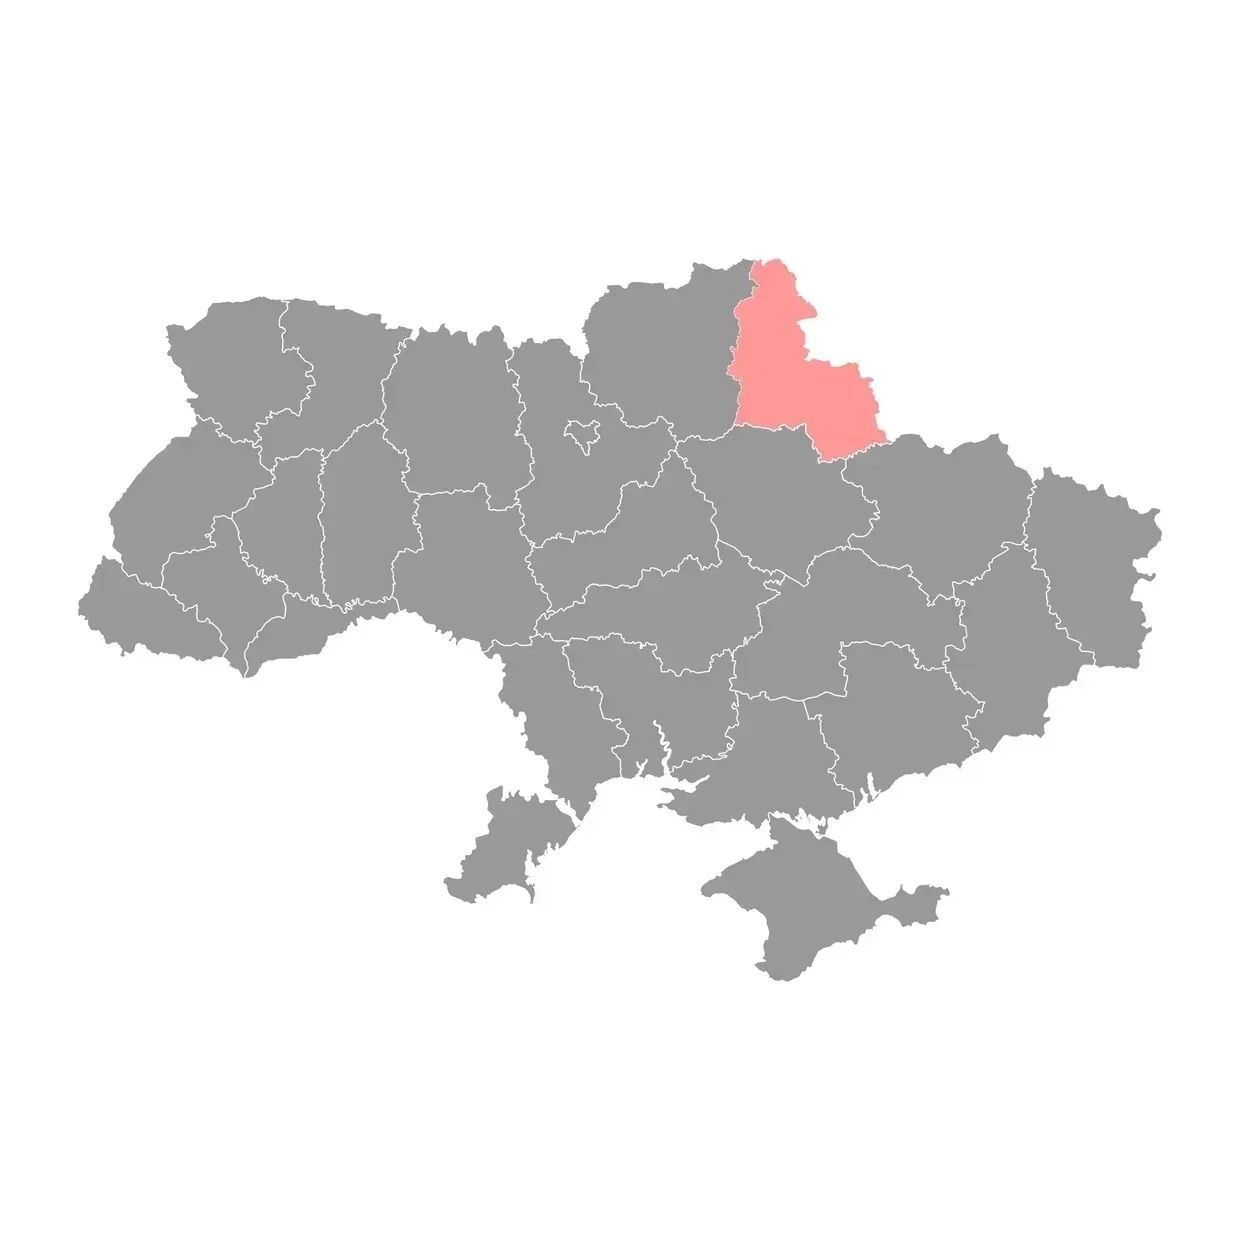 Russia attacks 10 communities in Sumy Oblast